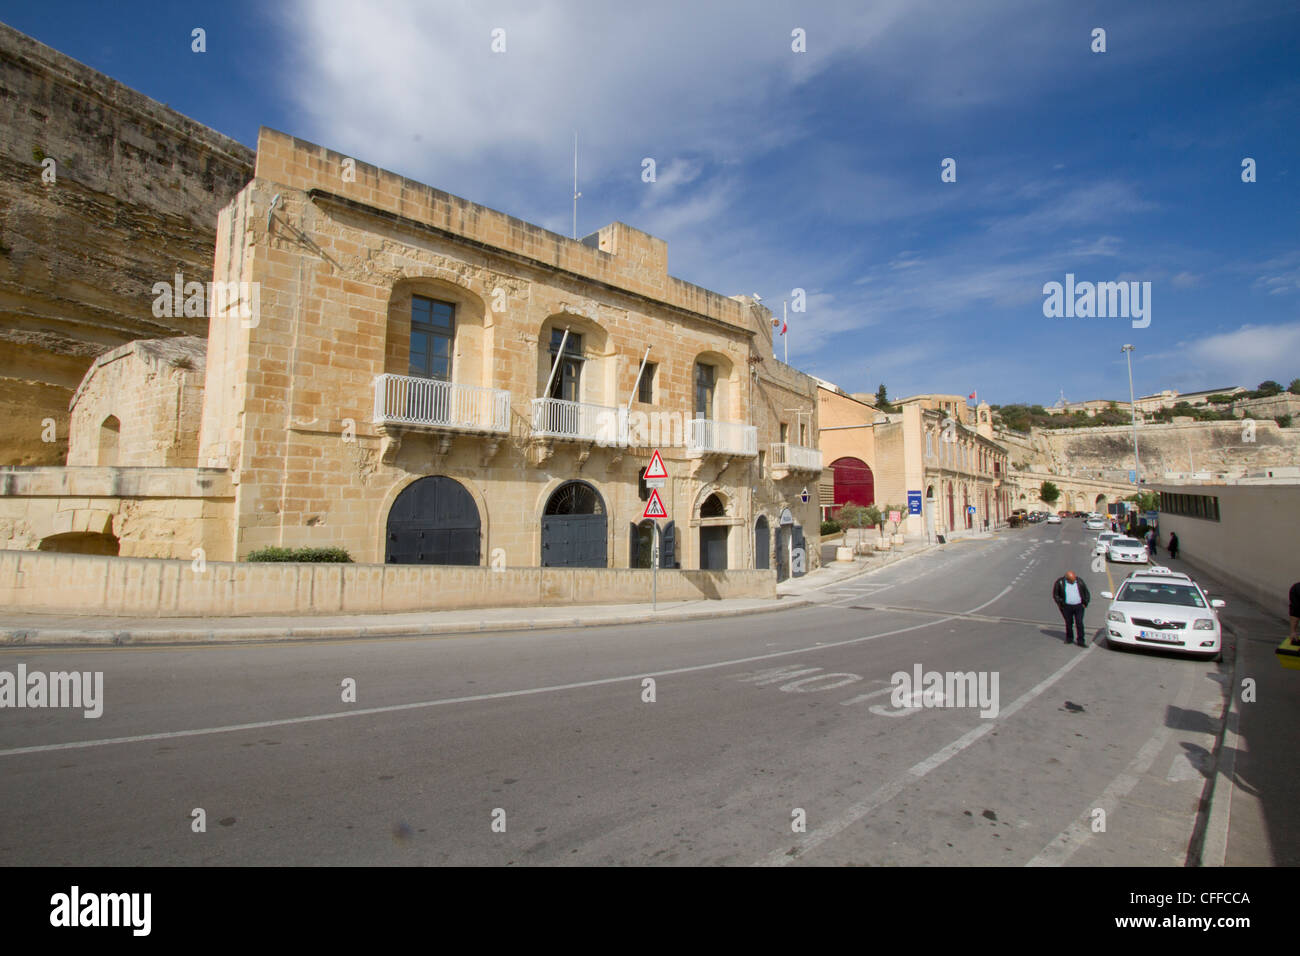 Street in La Valletta with building, Malta Stock Photo